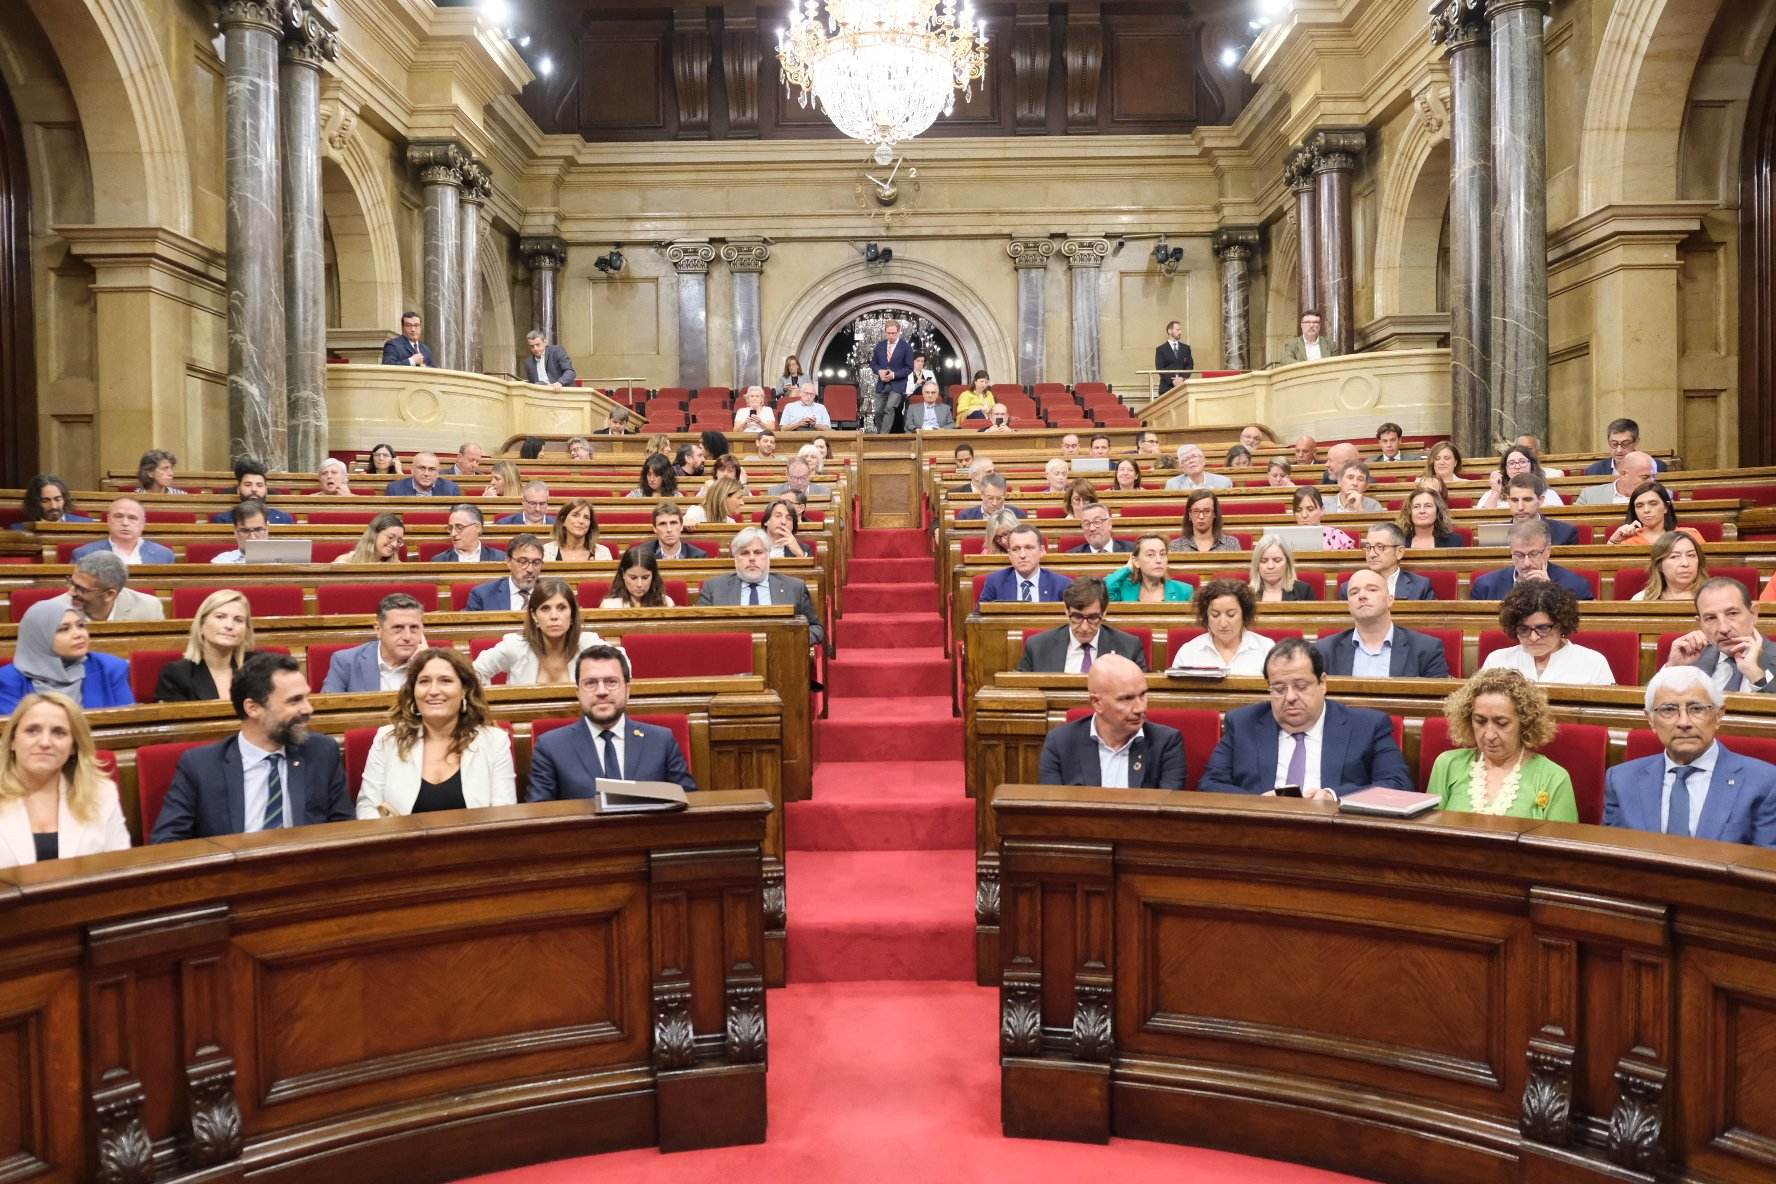 Hemicicle al debat de política general al Parlament de Catalunya. Carlos Baglietto